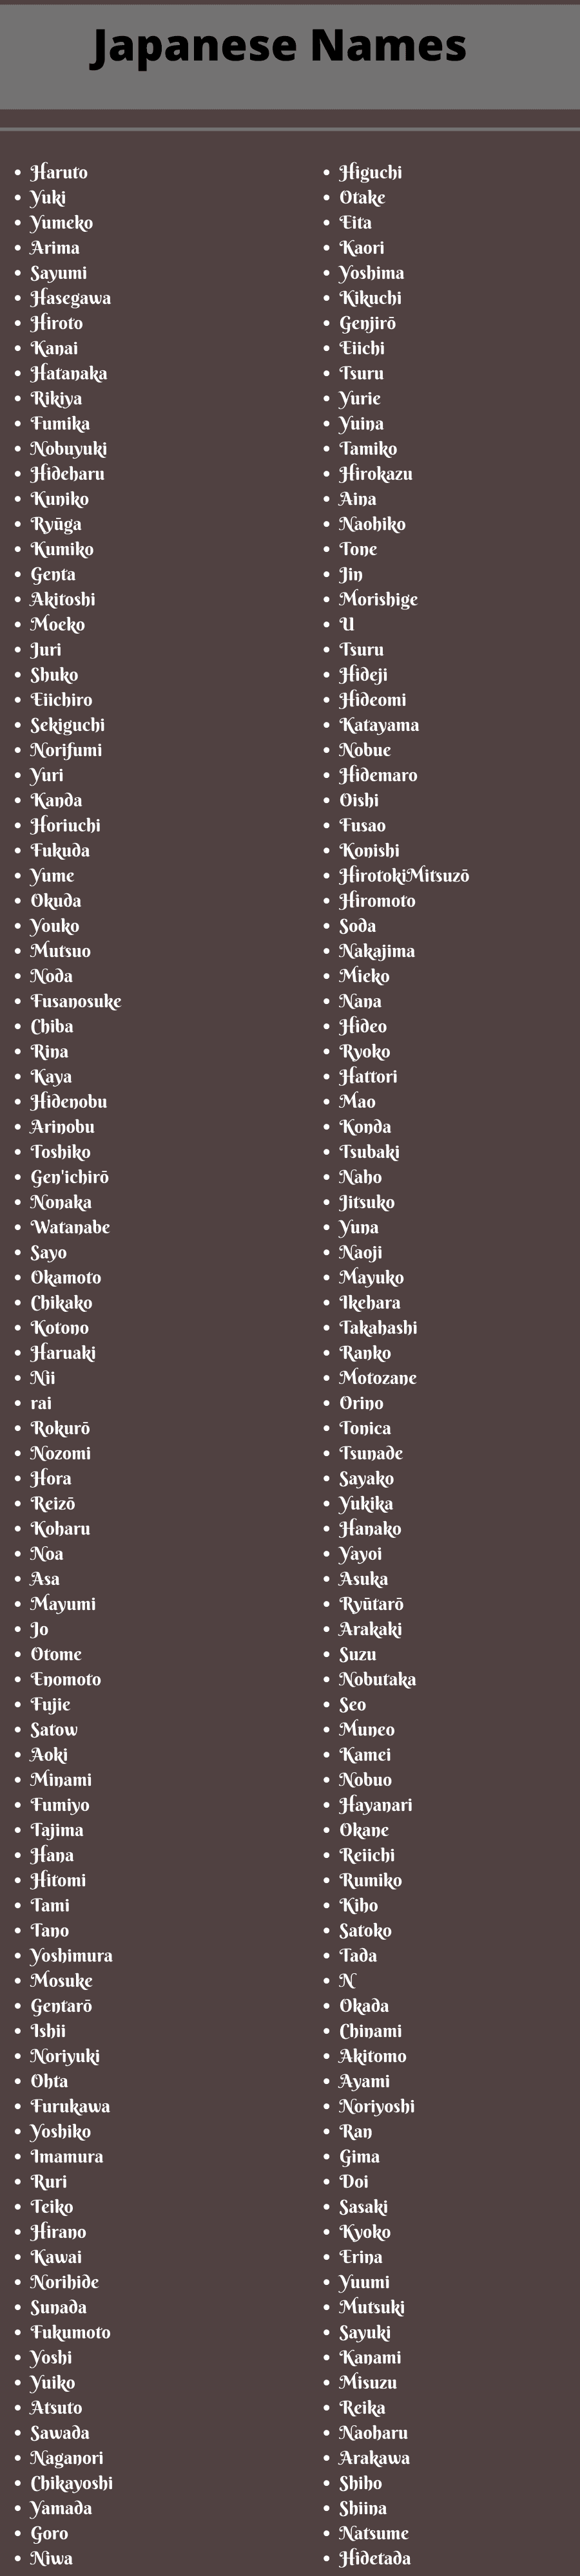 japanese names